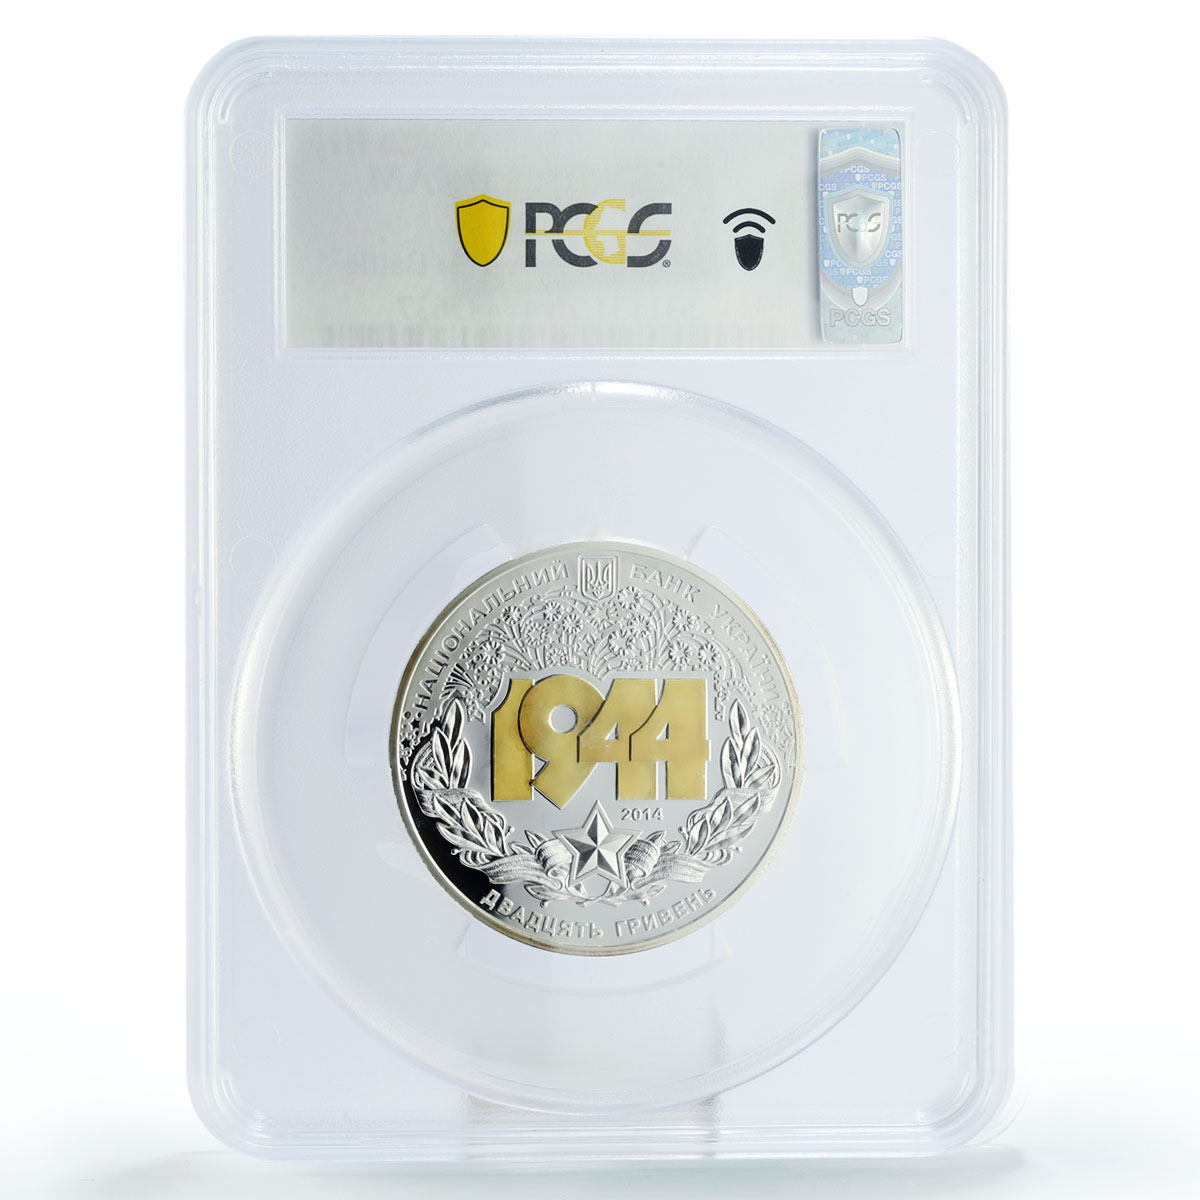 Ukraine 20 hryvnias 70 Years Korsun Shevchenko Battle PR70 PCGS silver coin 2014